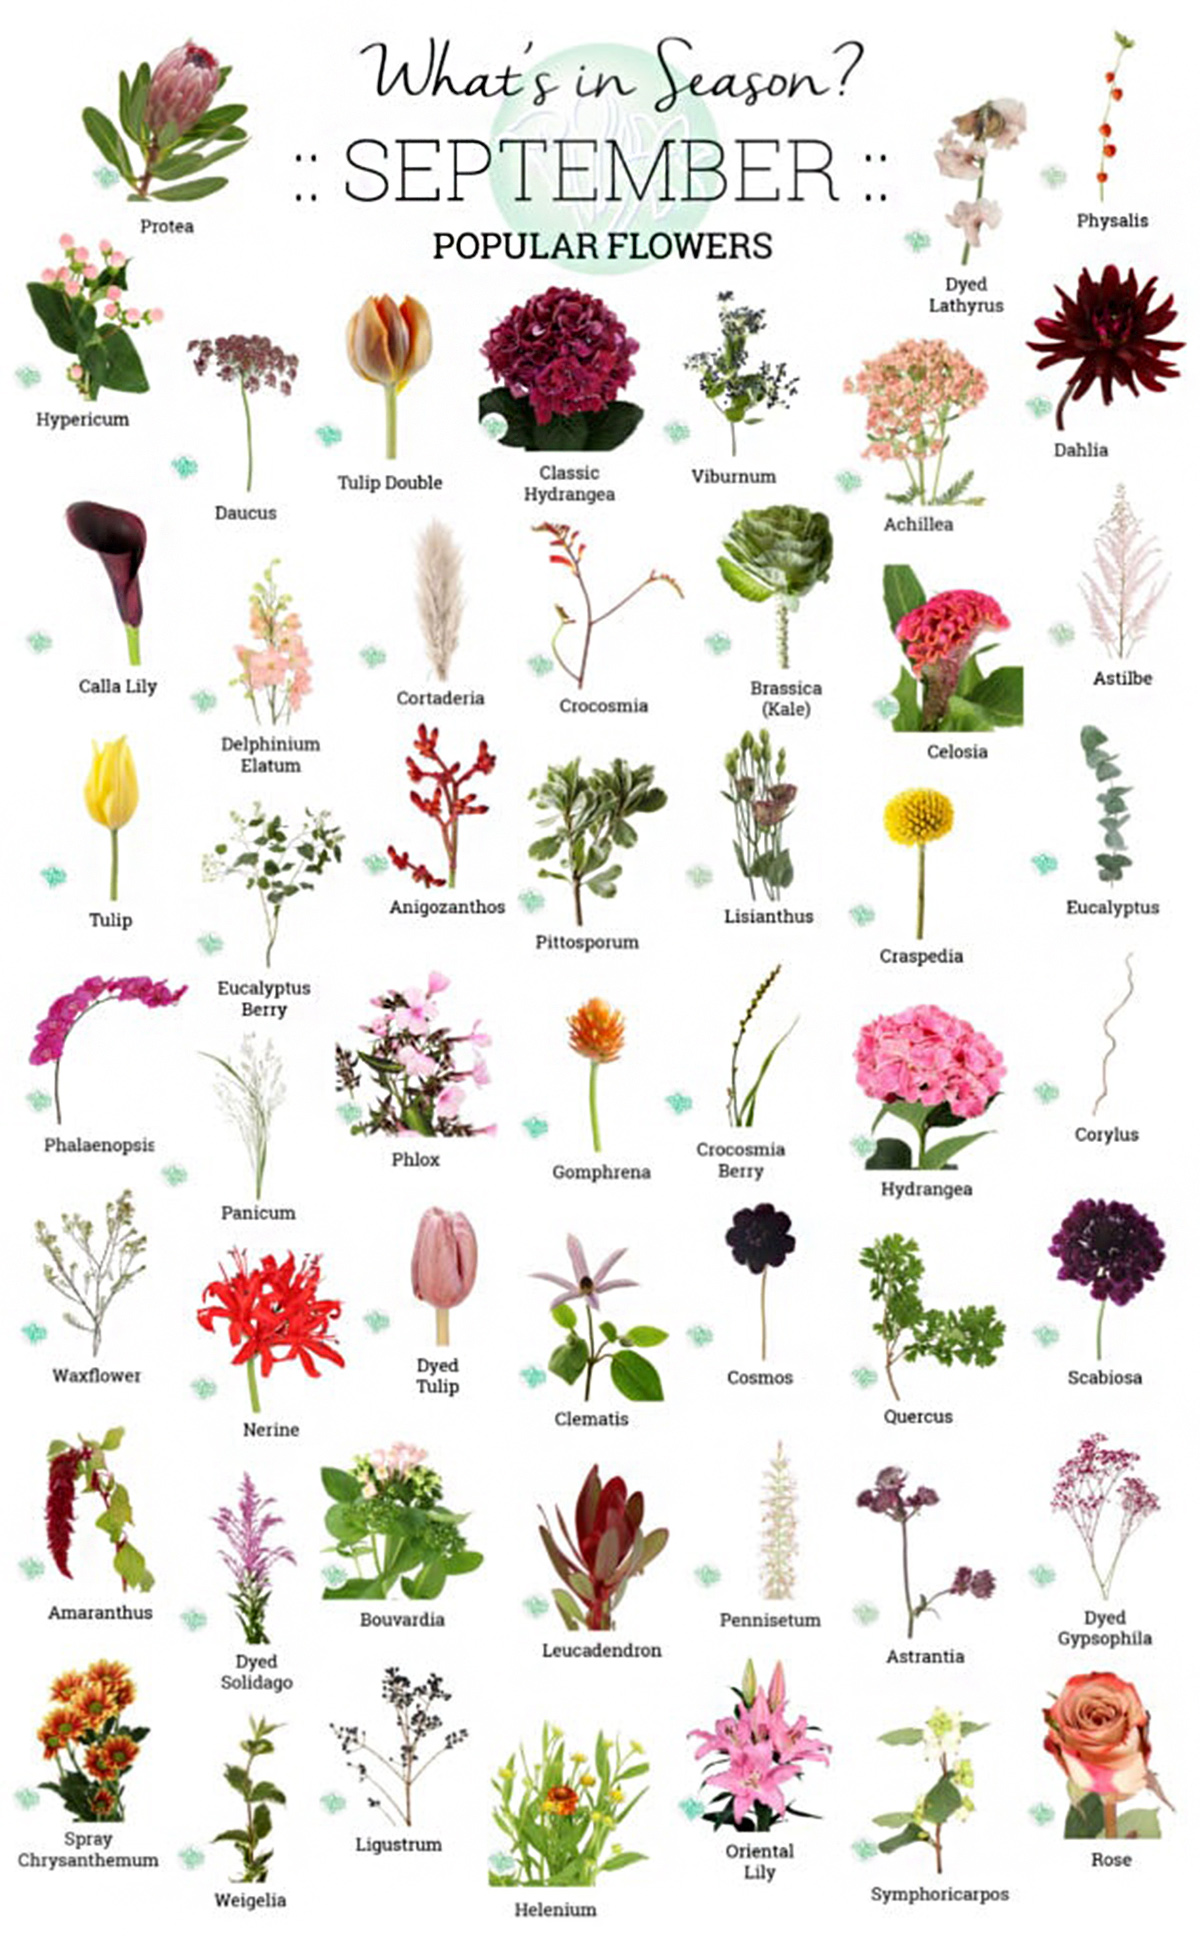 Wholesale Flowers in Season September - All Flowers